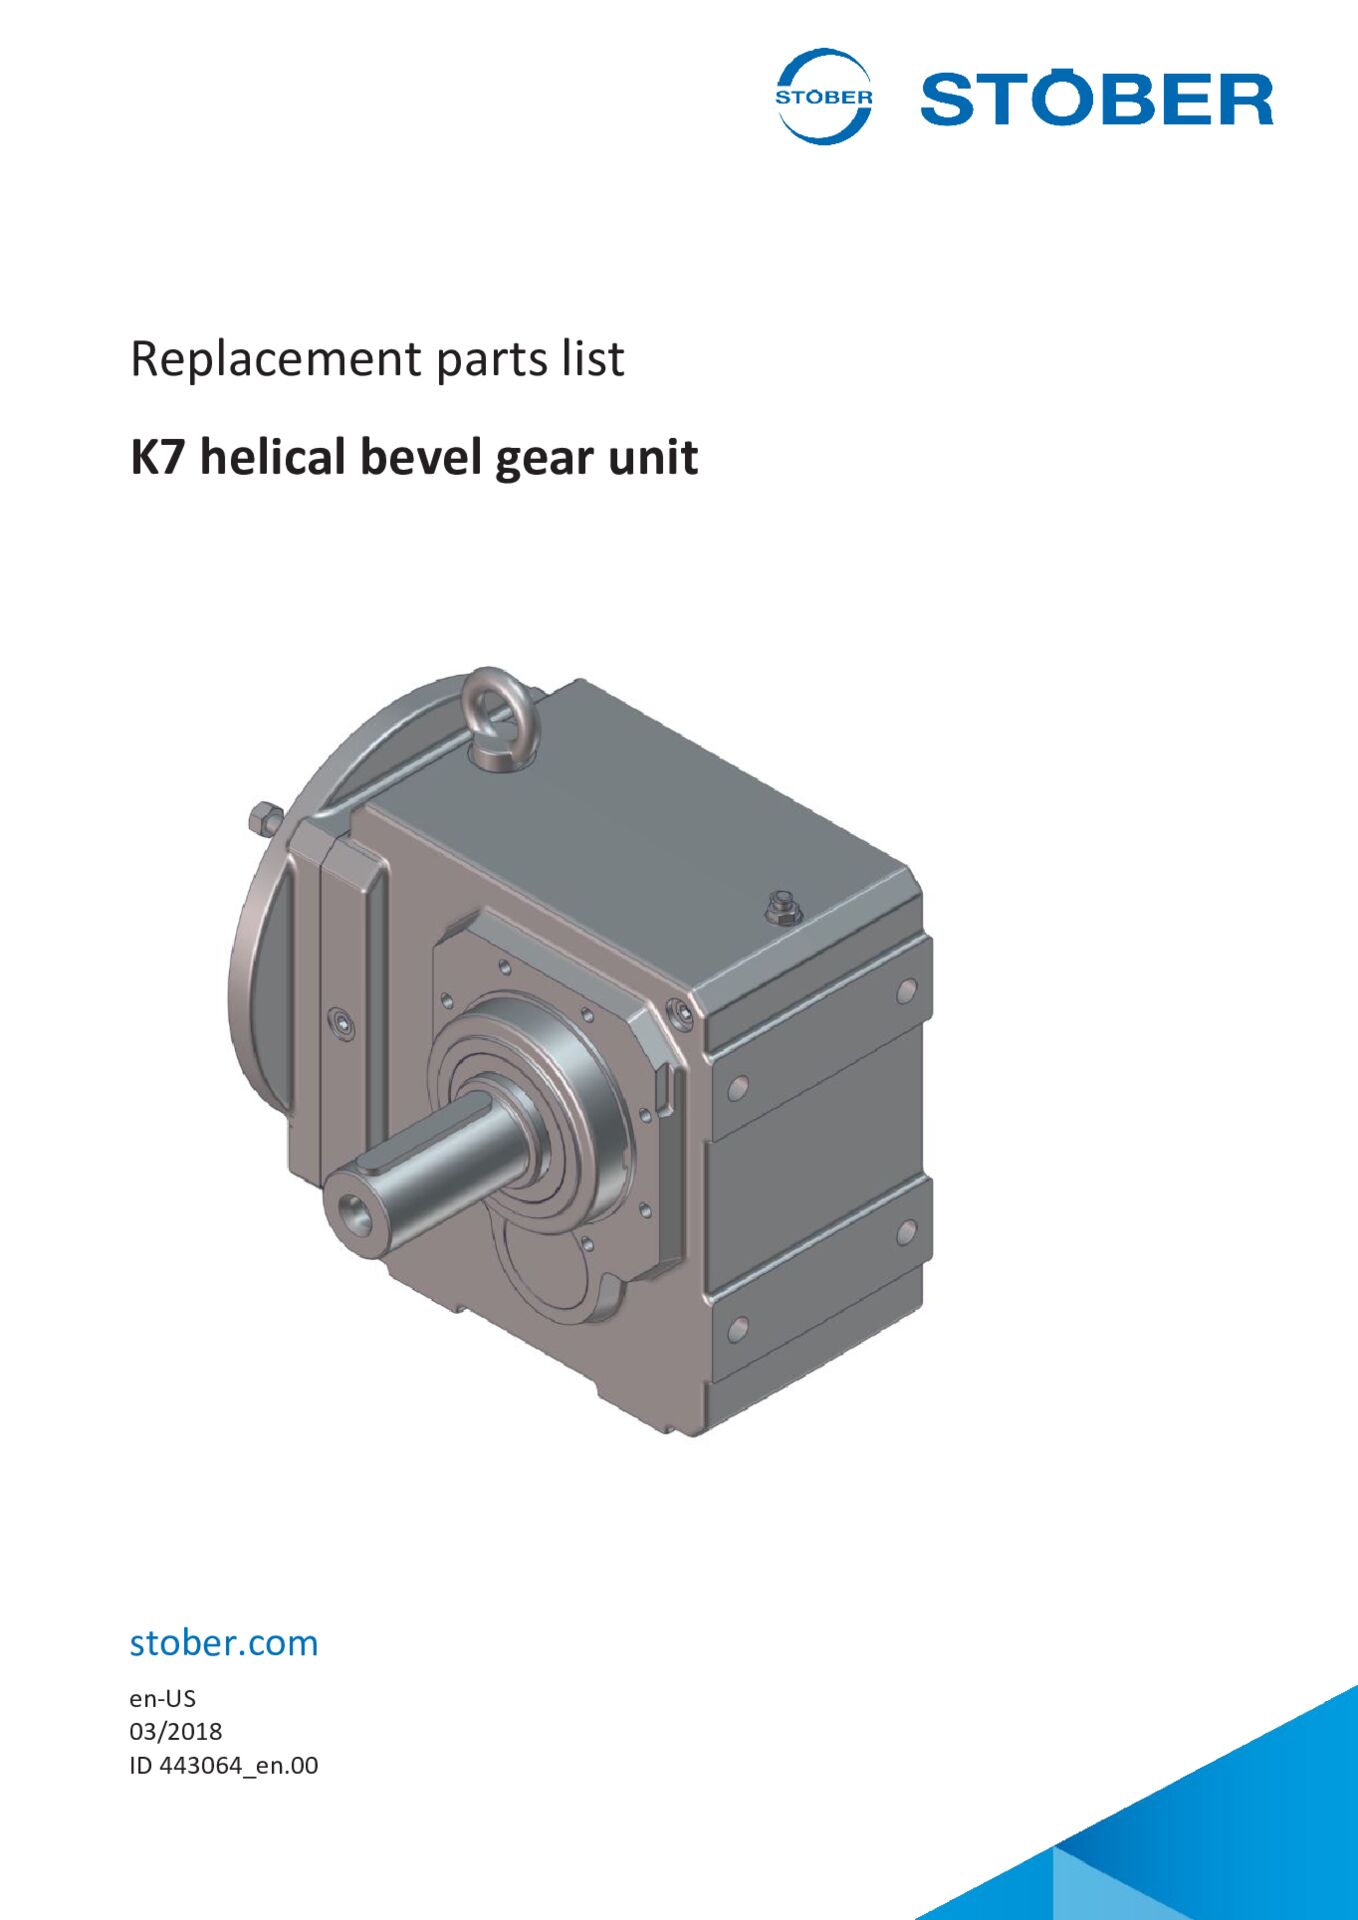 Replacement parts list K7 helical bevel gear unit